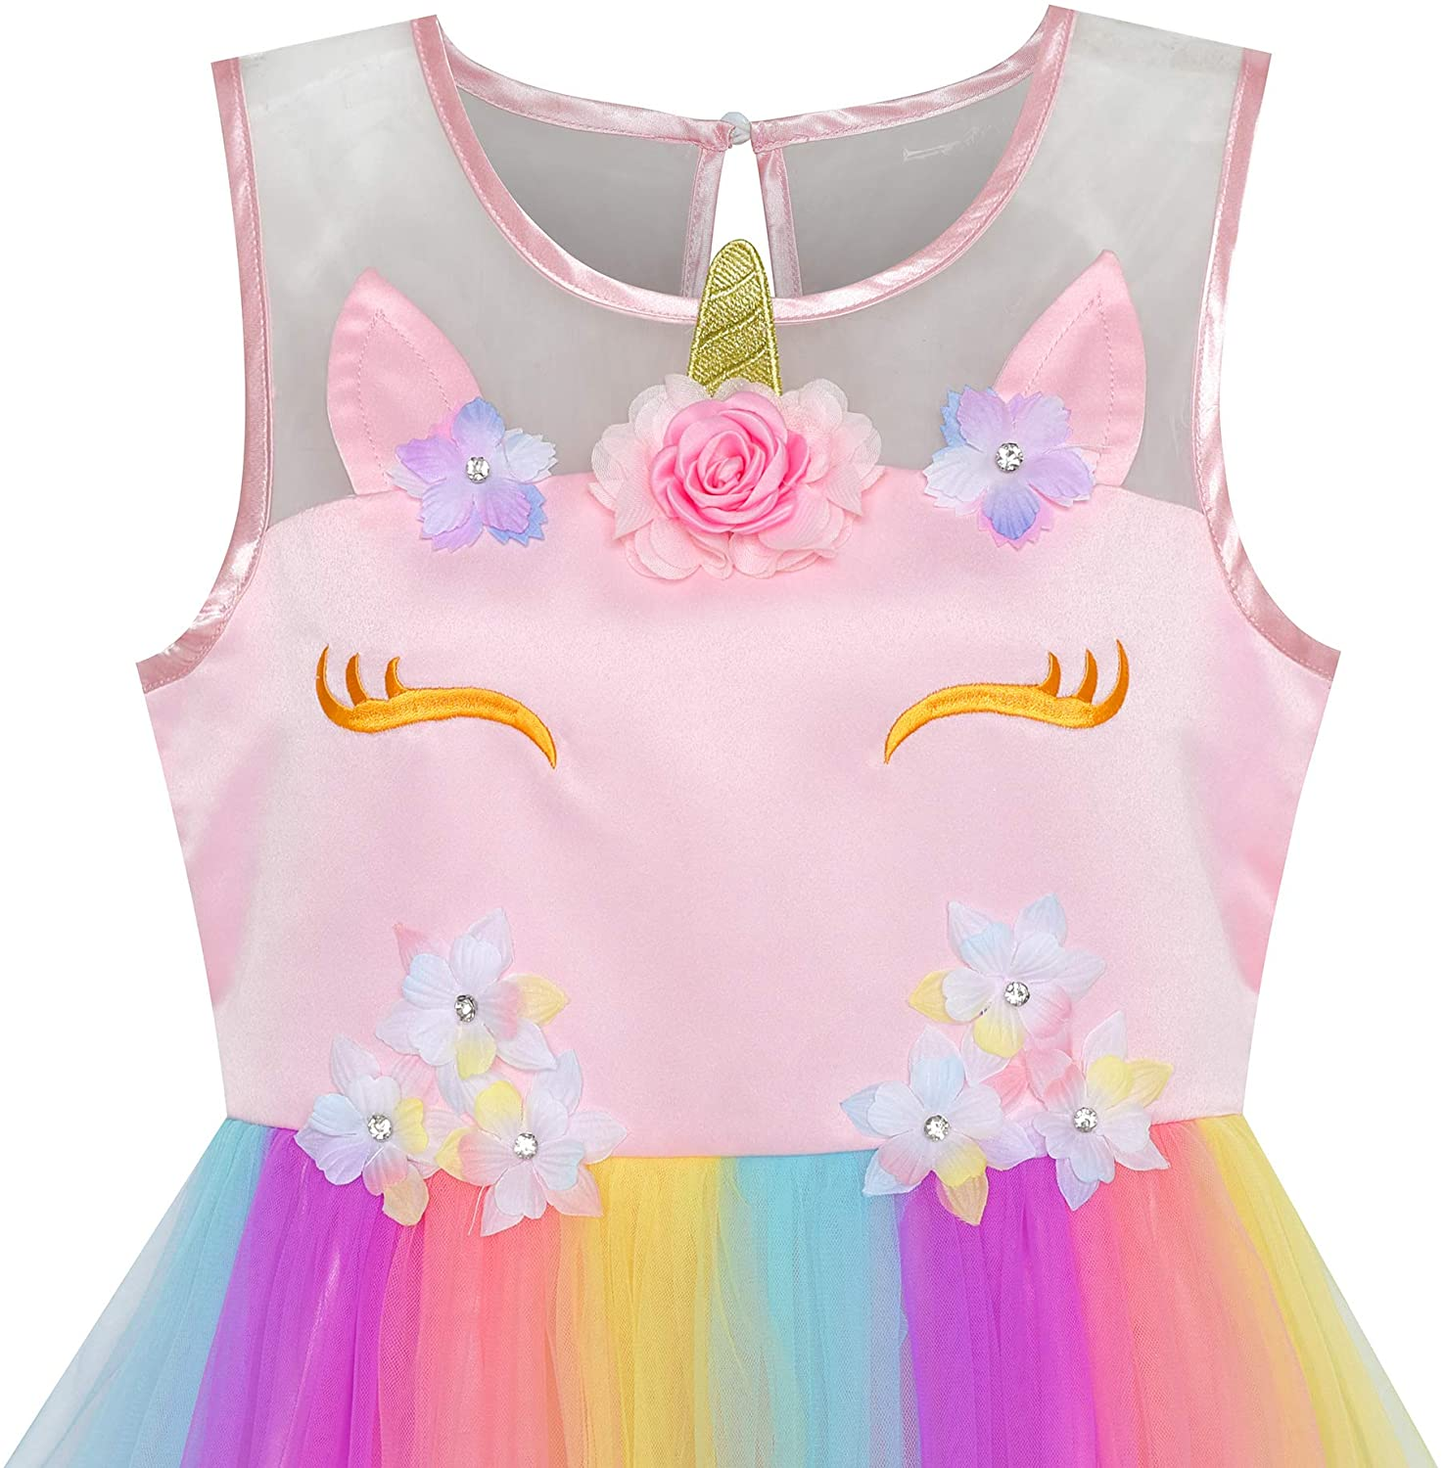 "Unicorn Rainbow Pageant Princess Party Dress for Girls"